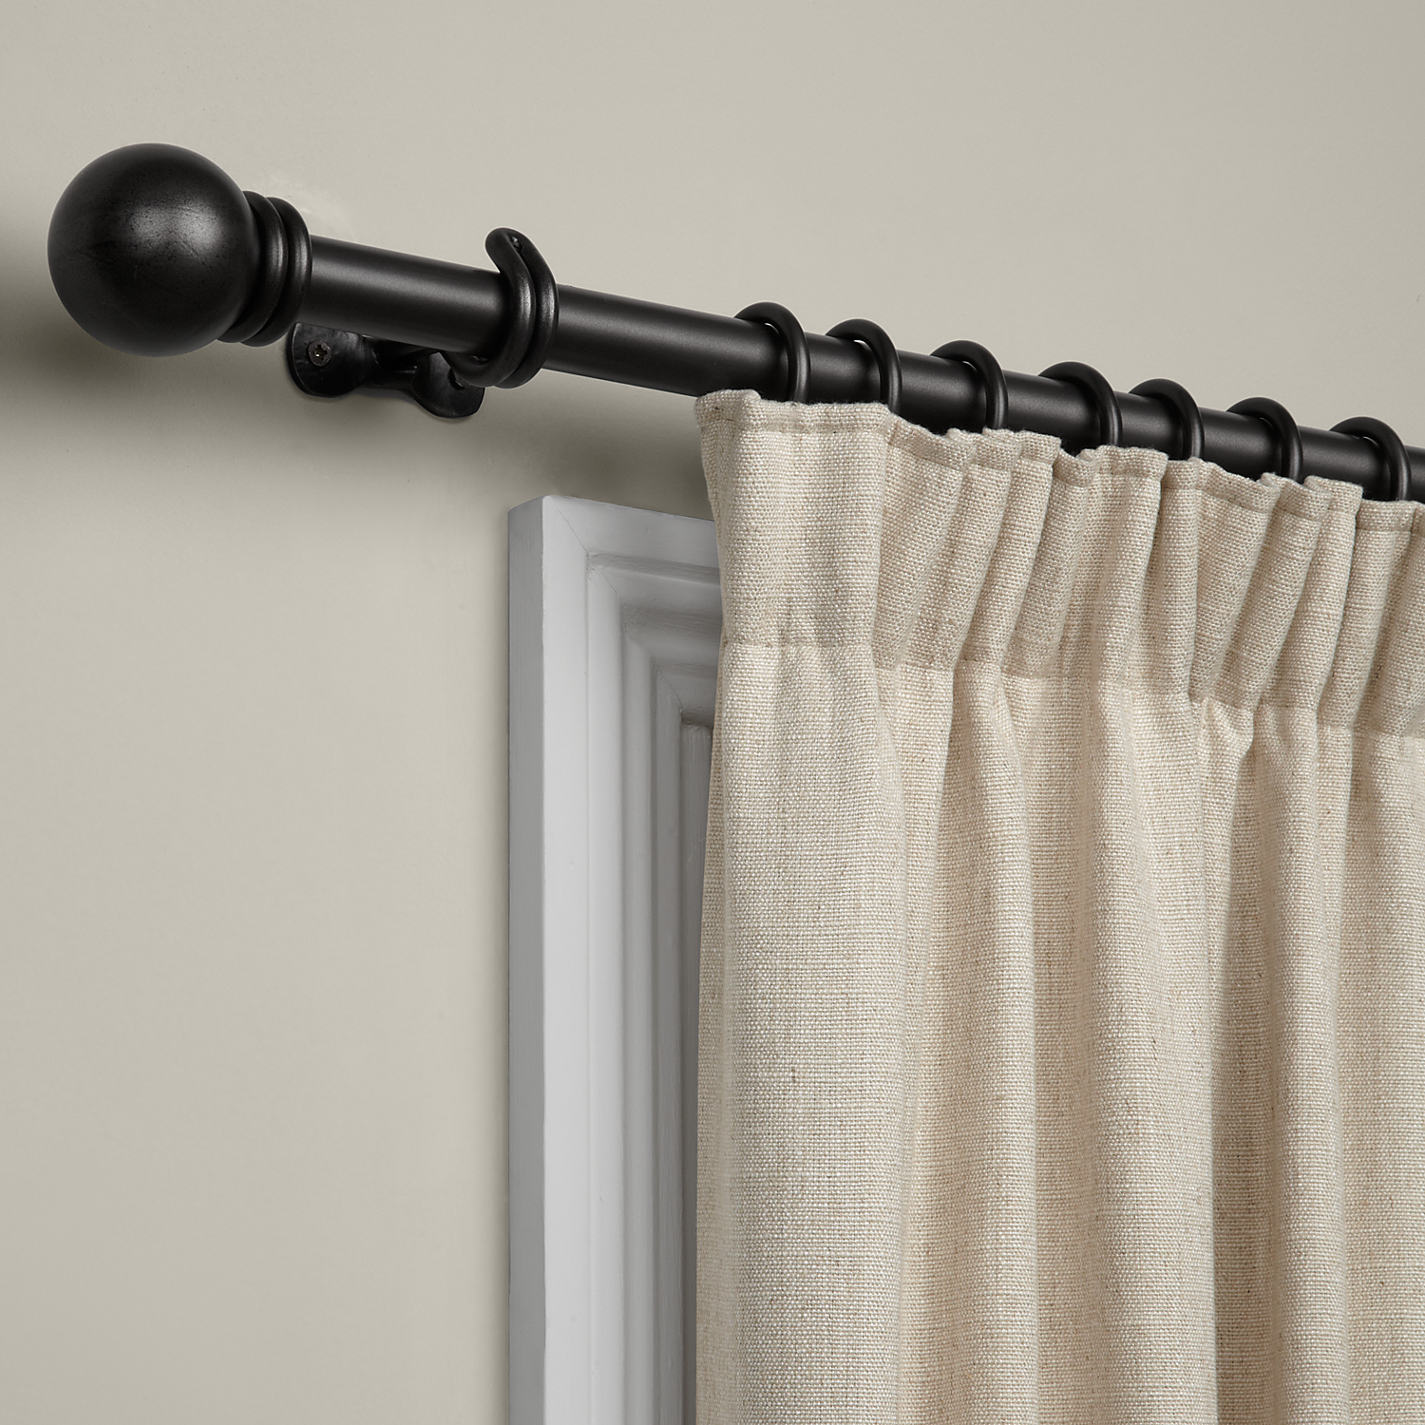 Minimalist Curtain Poles Idea - Decoration Channel